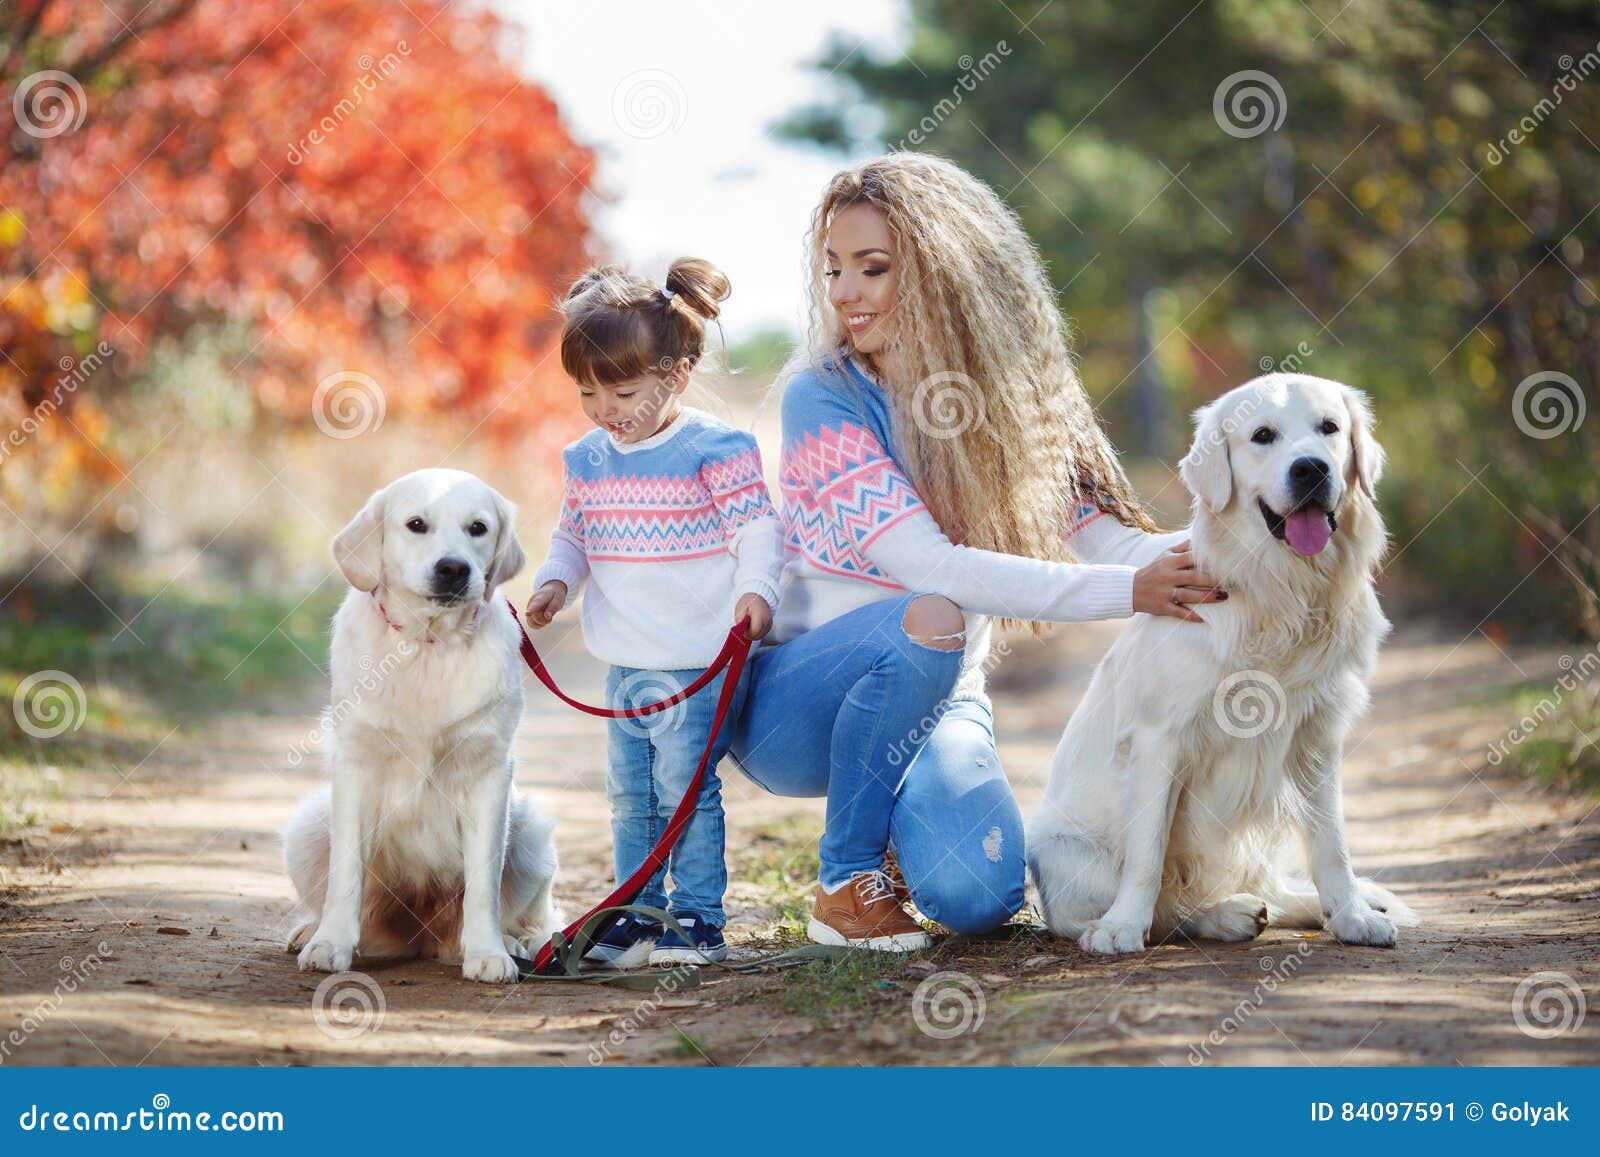 Girl two dog. Прогулки ретривера. Лабрадор на прогулке. Фотосессия осенняя с ретривером семейная. Девочка гуляет с лабрадором.